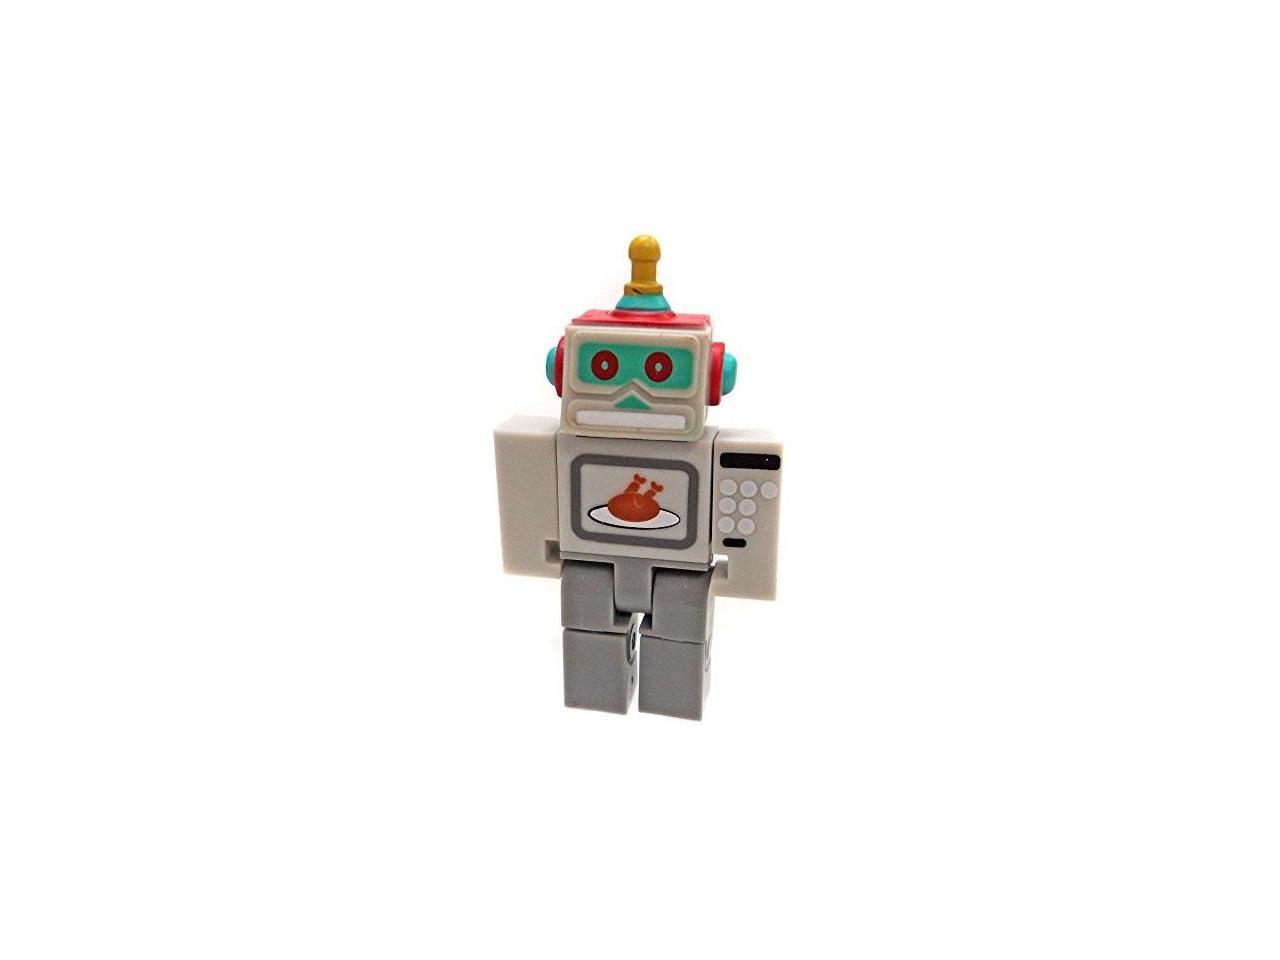 Roblox Series 2 Microwave Spybot Action Figure Mystery Box Virtual Item Code 2 5 Newegg Com - roblox flashlight gear code